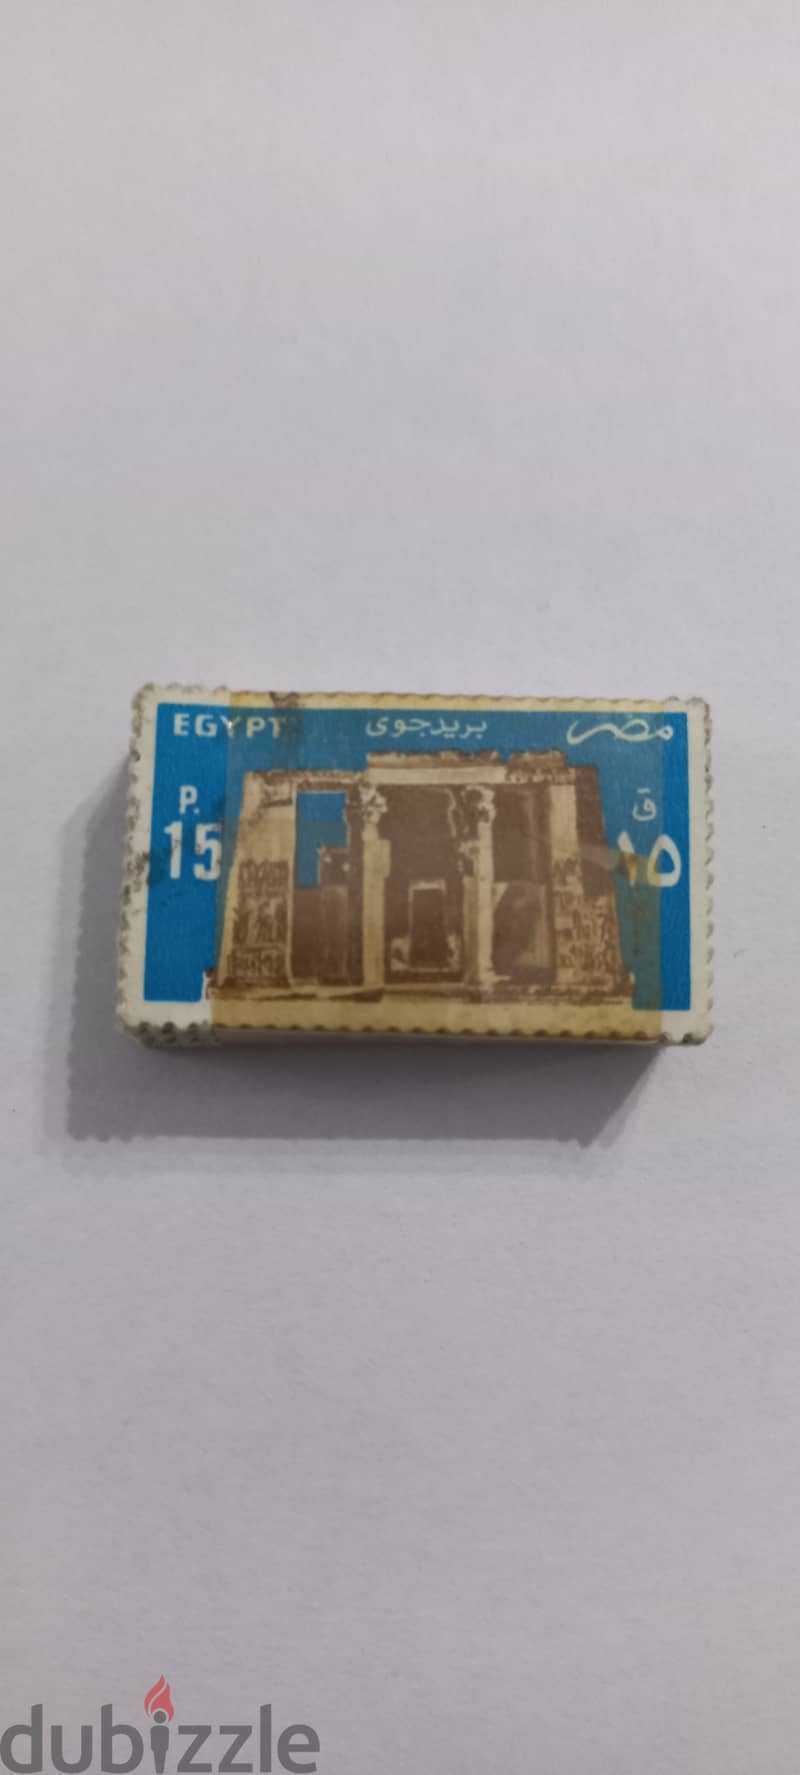 طوابع مصريه قديمه مختلفه 9